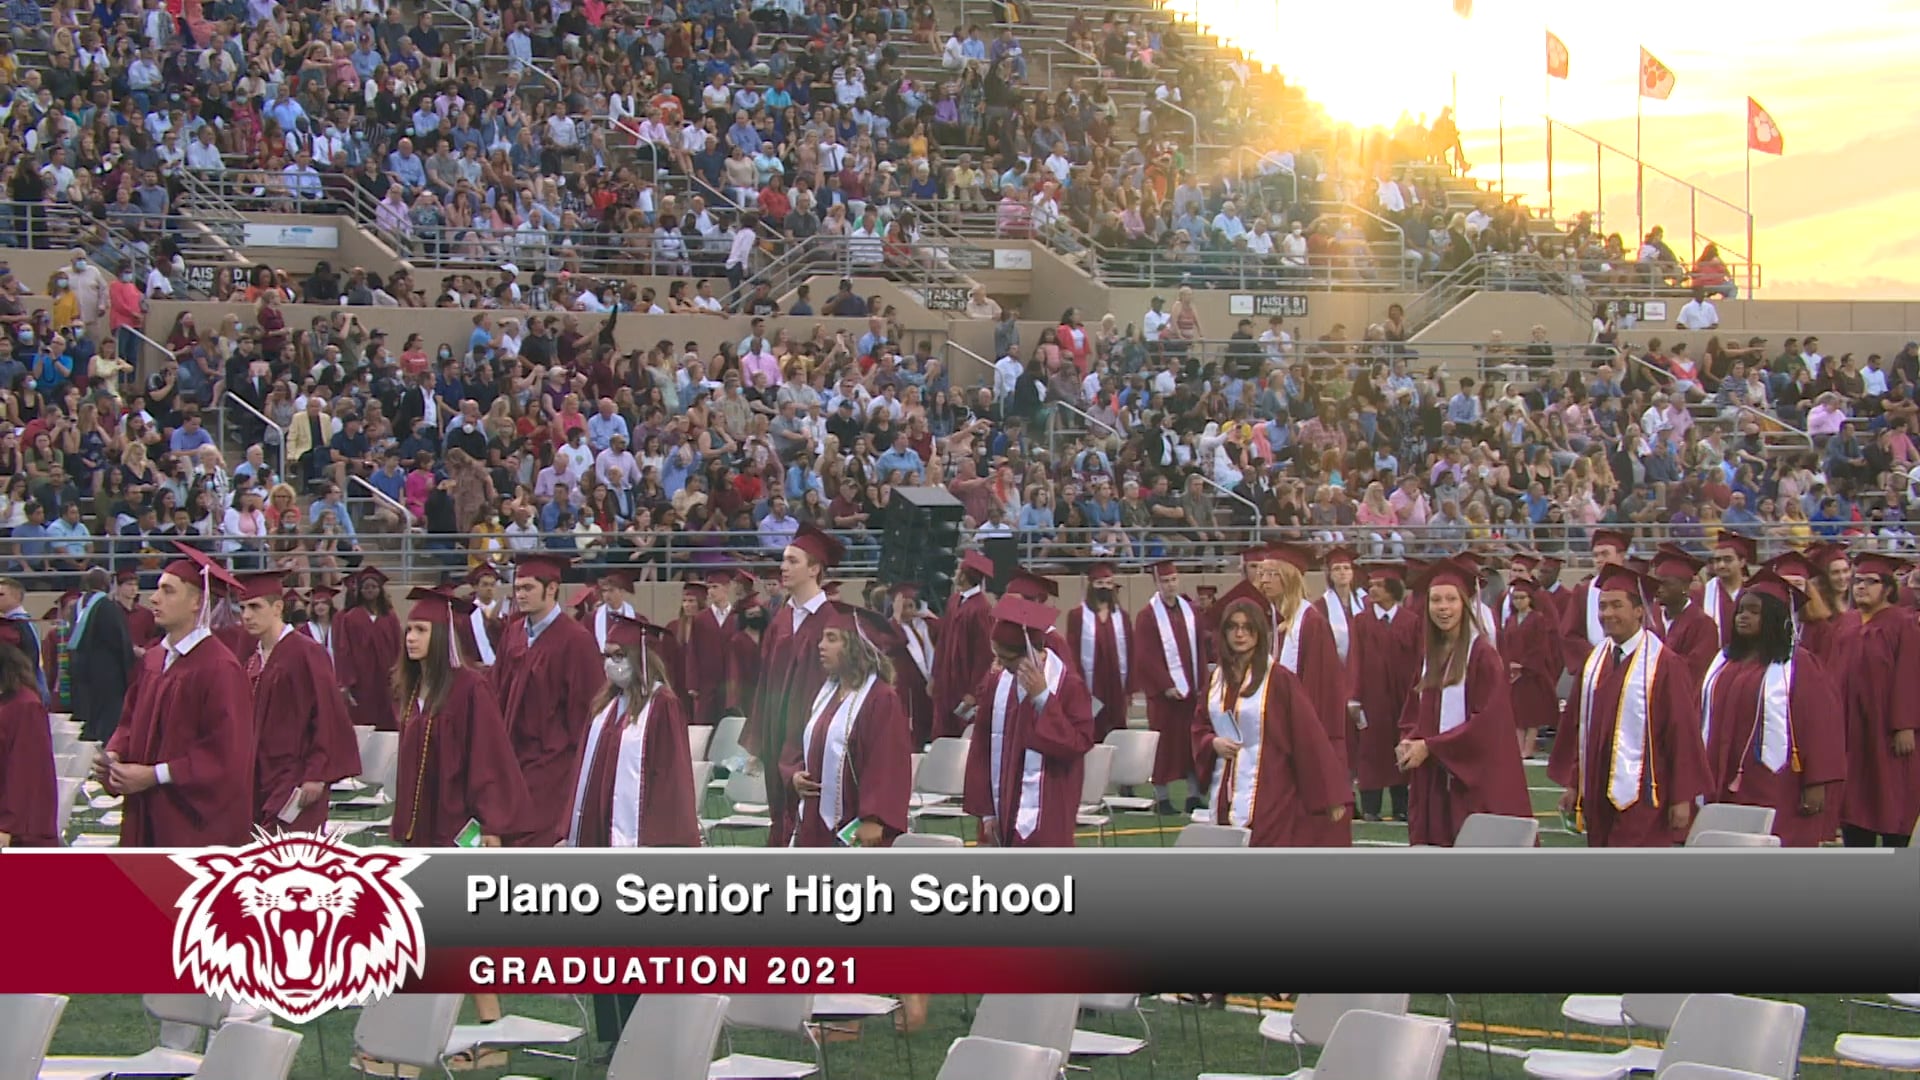 Plano Senior High School Graduation Ceremony 2021 on Vimeo